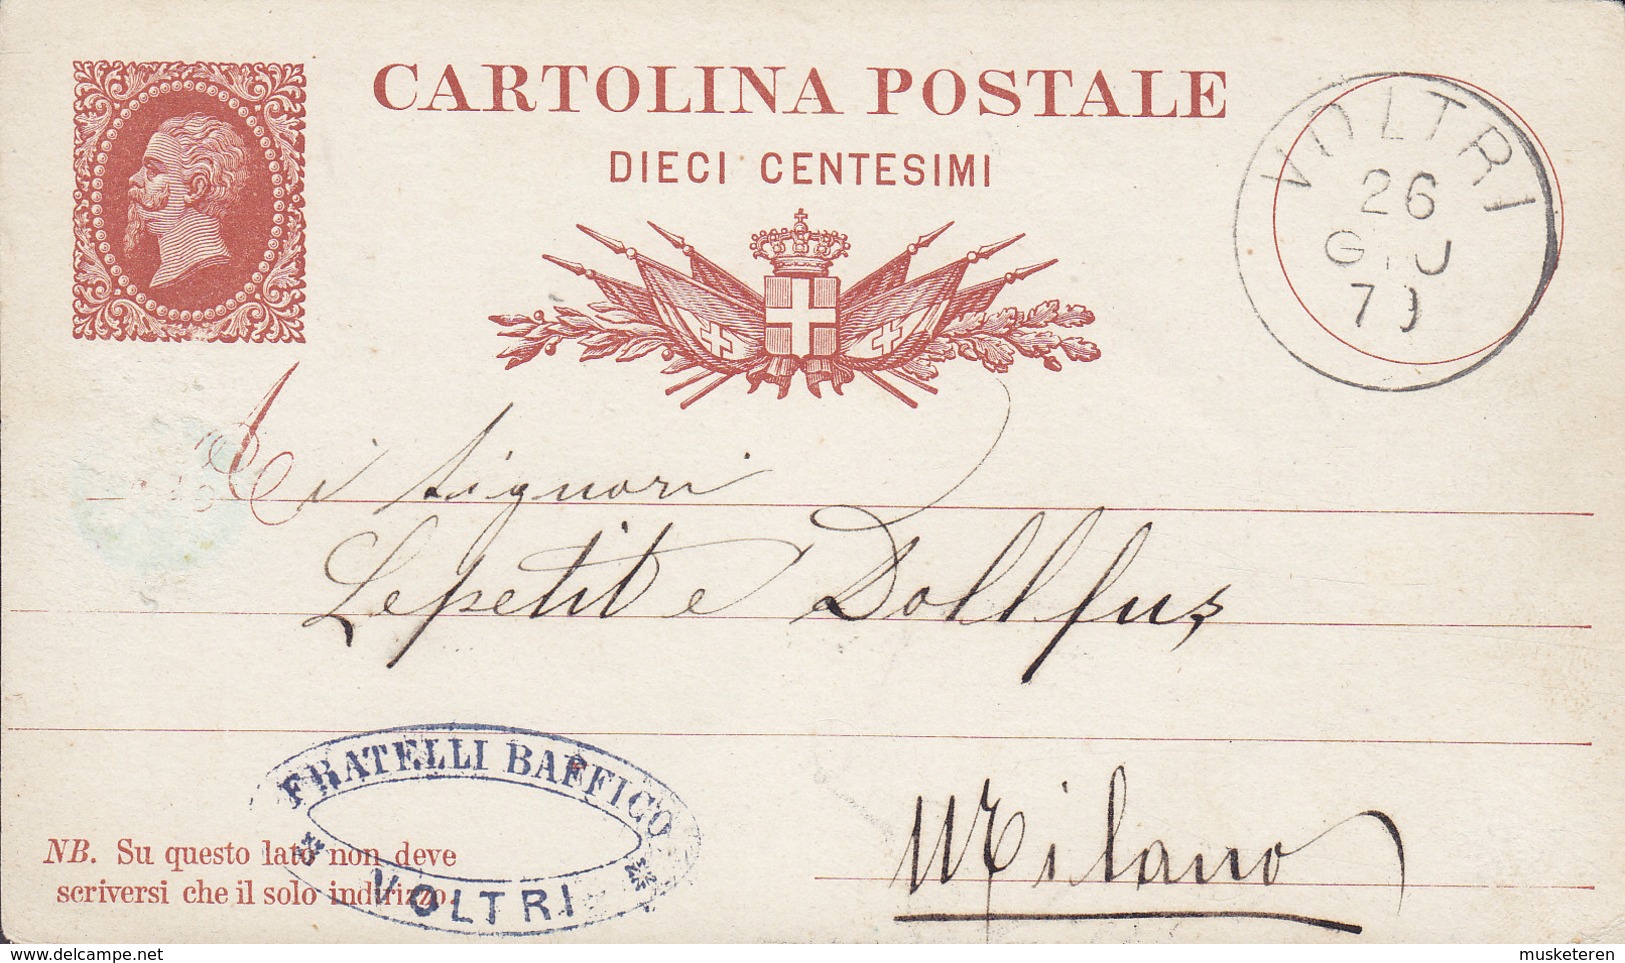 Italy Postal Stationery Ganzsache Entier 10 Cmi Victor Emanuel II. FRATELLI BAFFICO 1879 MILANO (2 Scans) - Ganzsachen